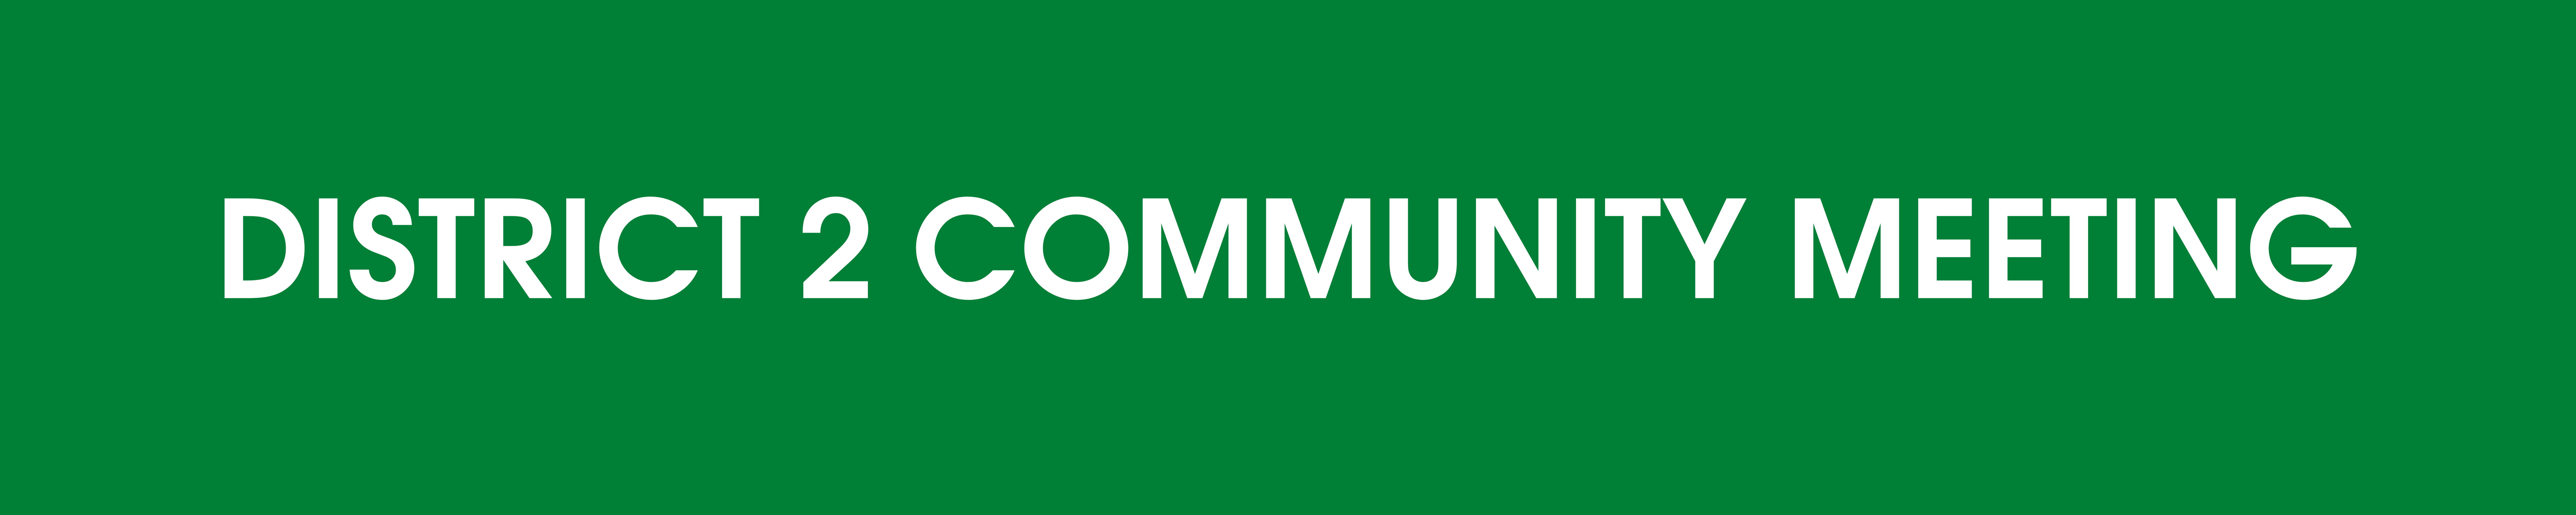 D2 Community Meeting Banner